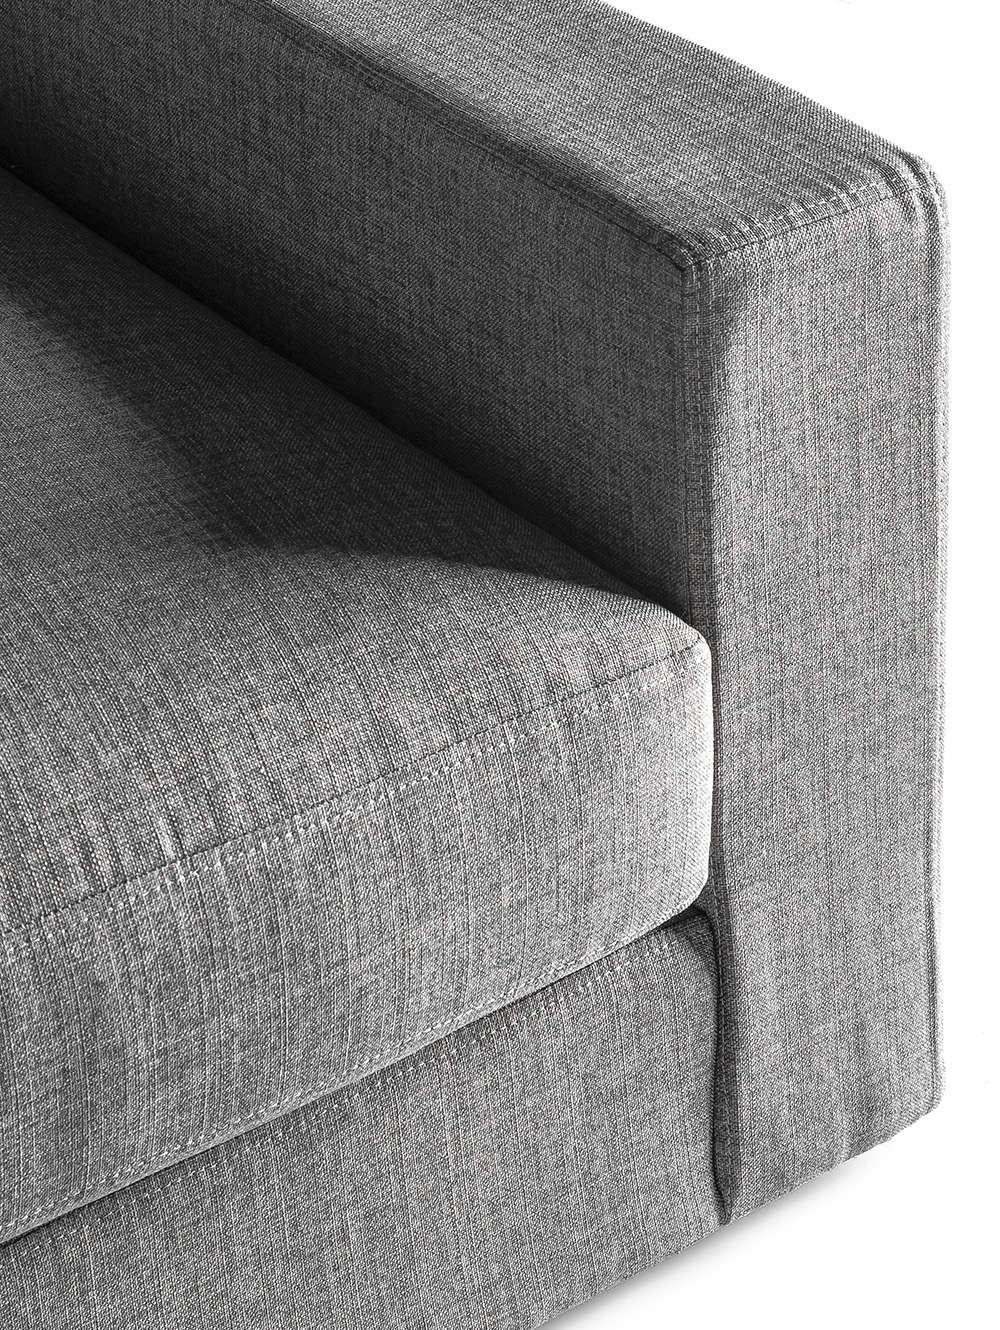 Sofa en ele gris oscuro-SOFA BELMONT SPAZIO PETROLEO-Landmark-7.jpg image number null